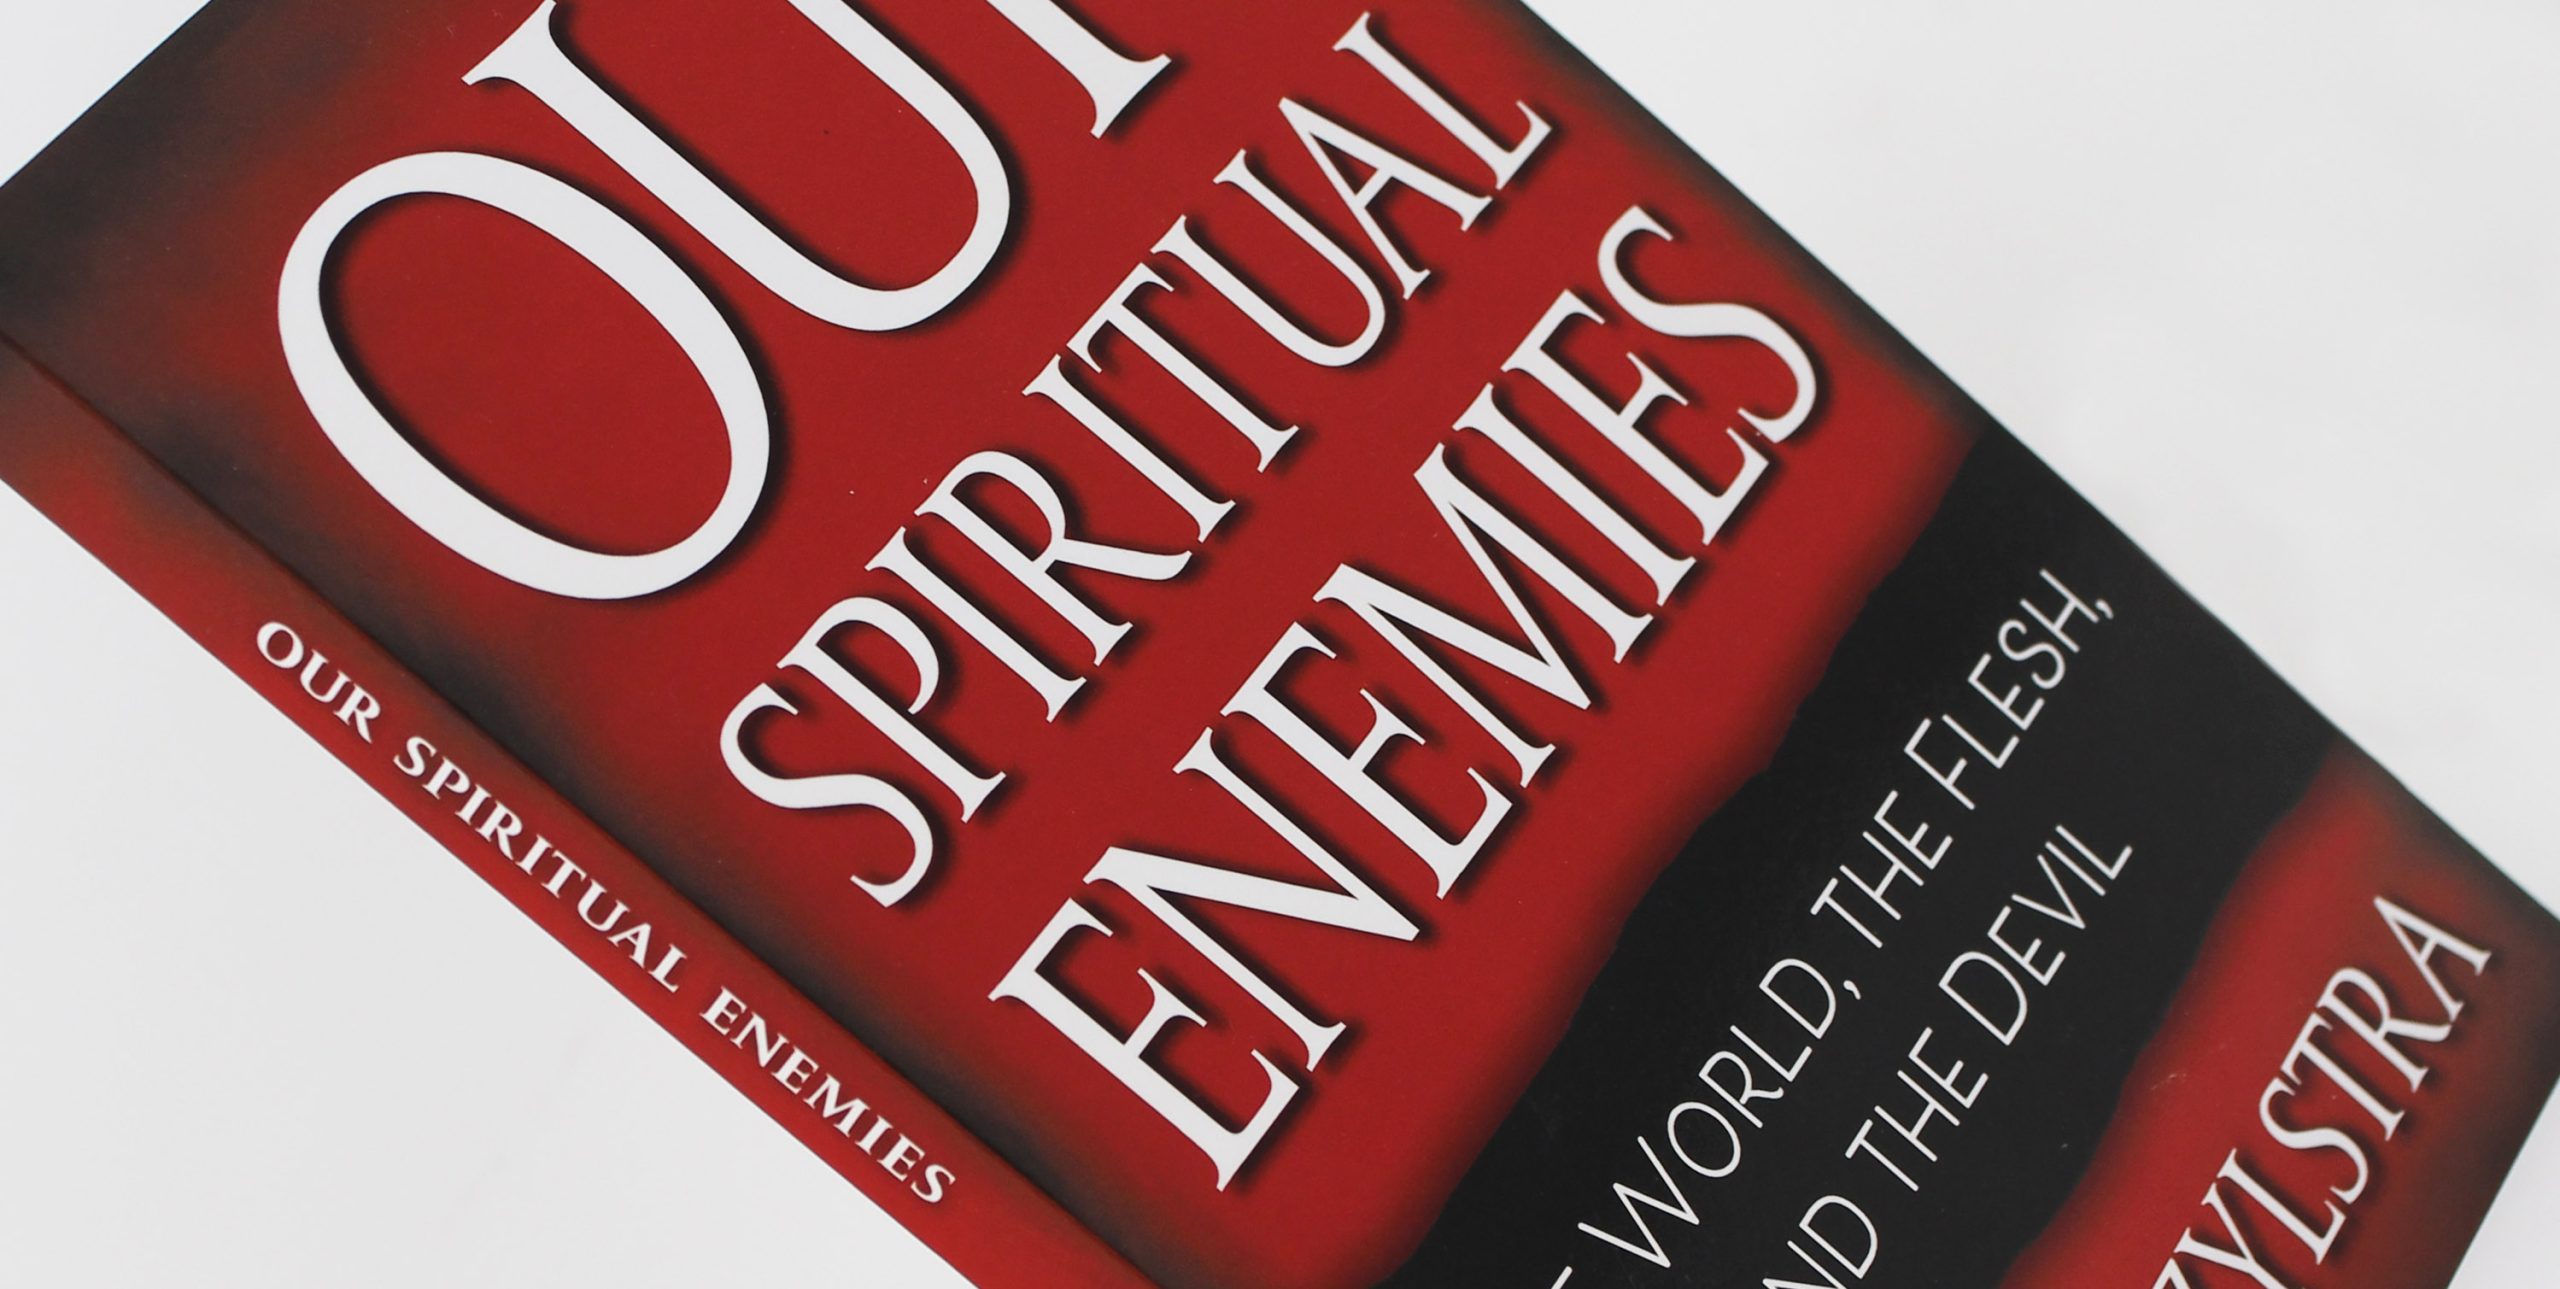 Our Spiritual Enemies book cover